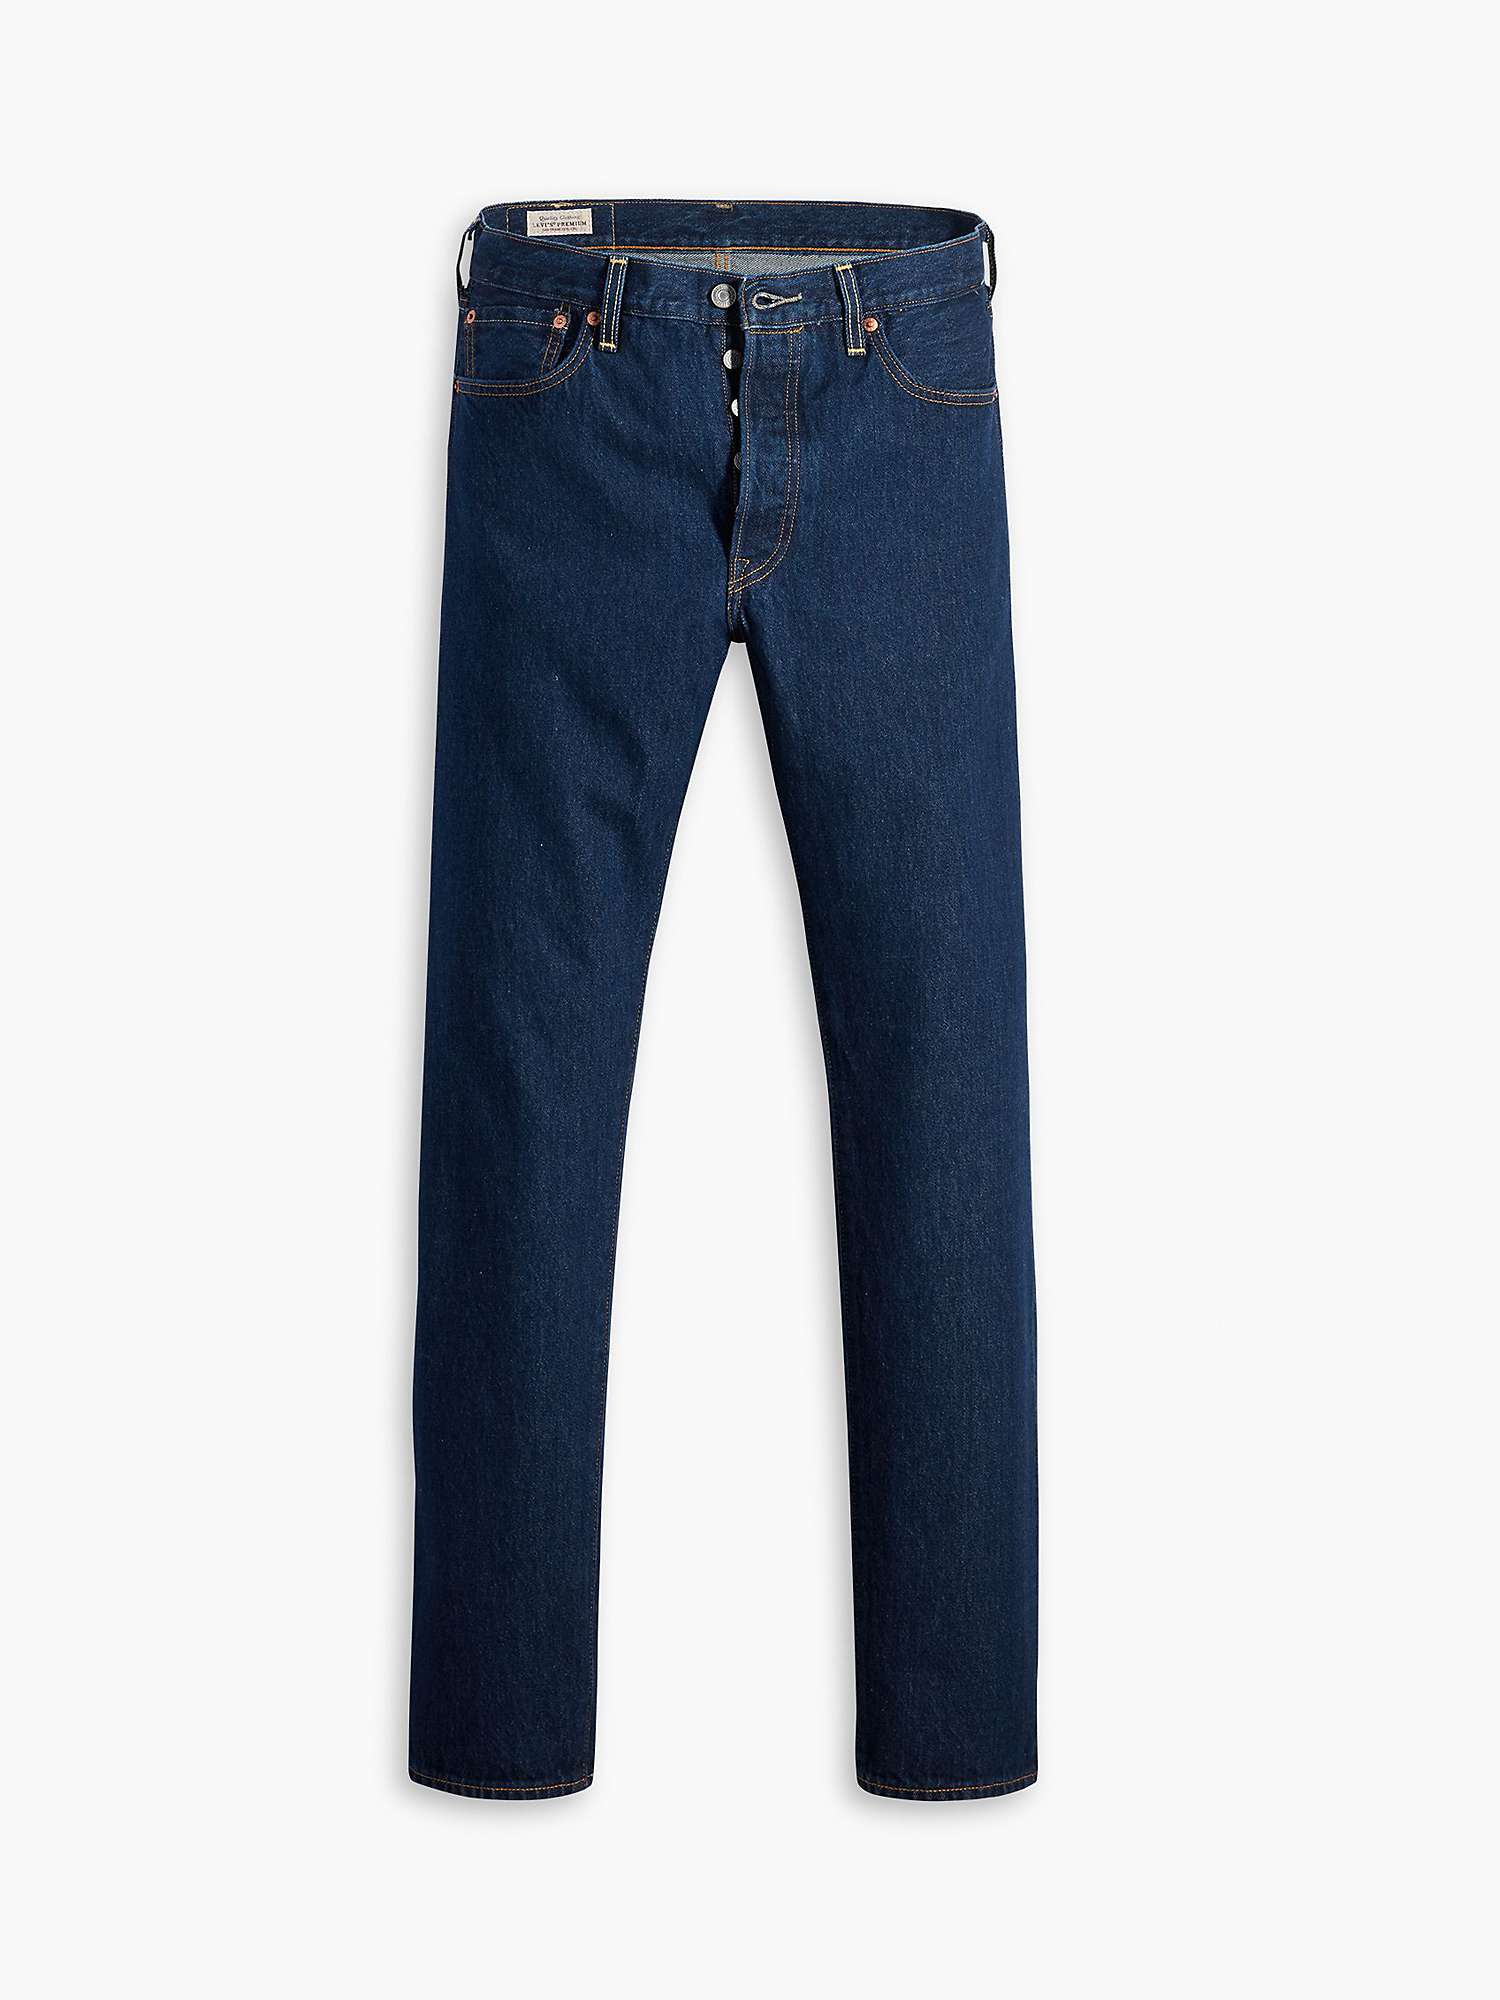 Buy Levi's 501 '54 Slim Fit Jeans, 1954 Rinse Online at johnlewis.com